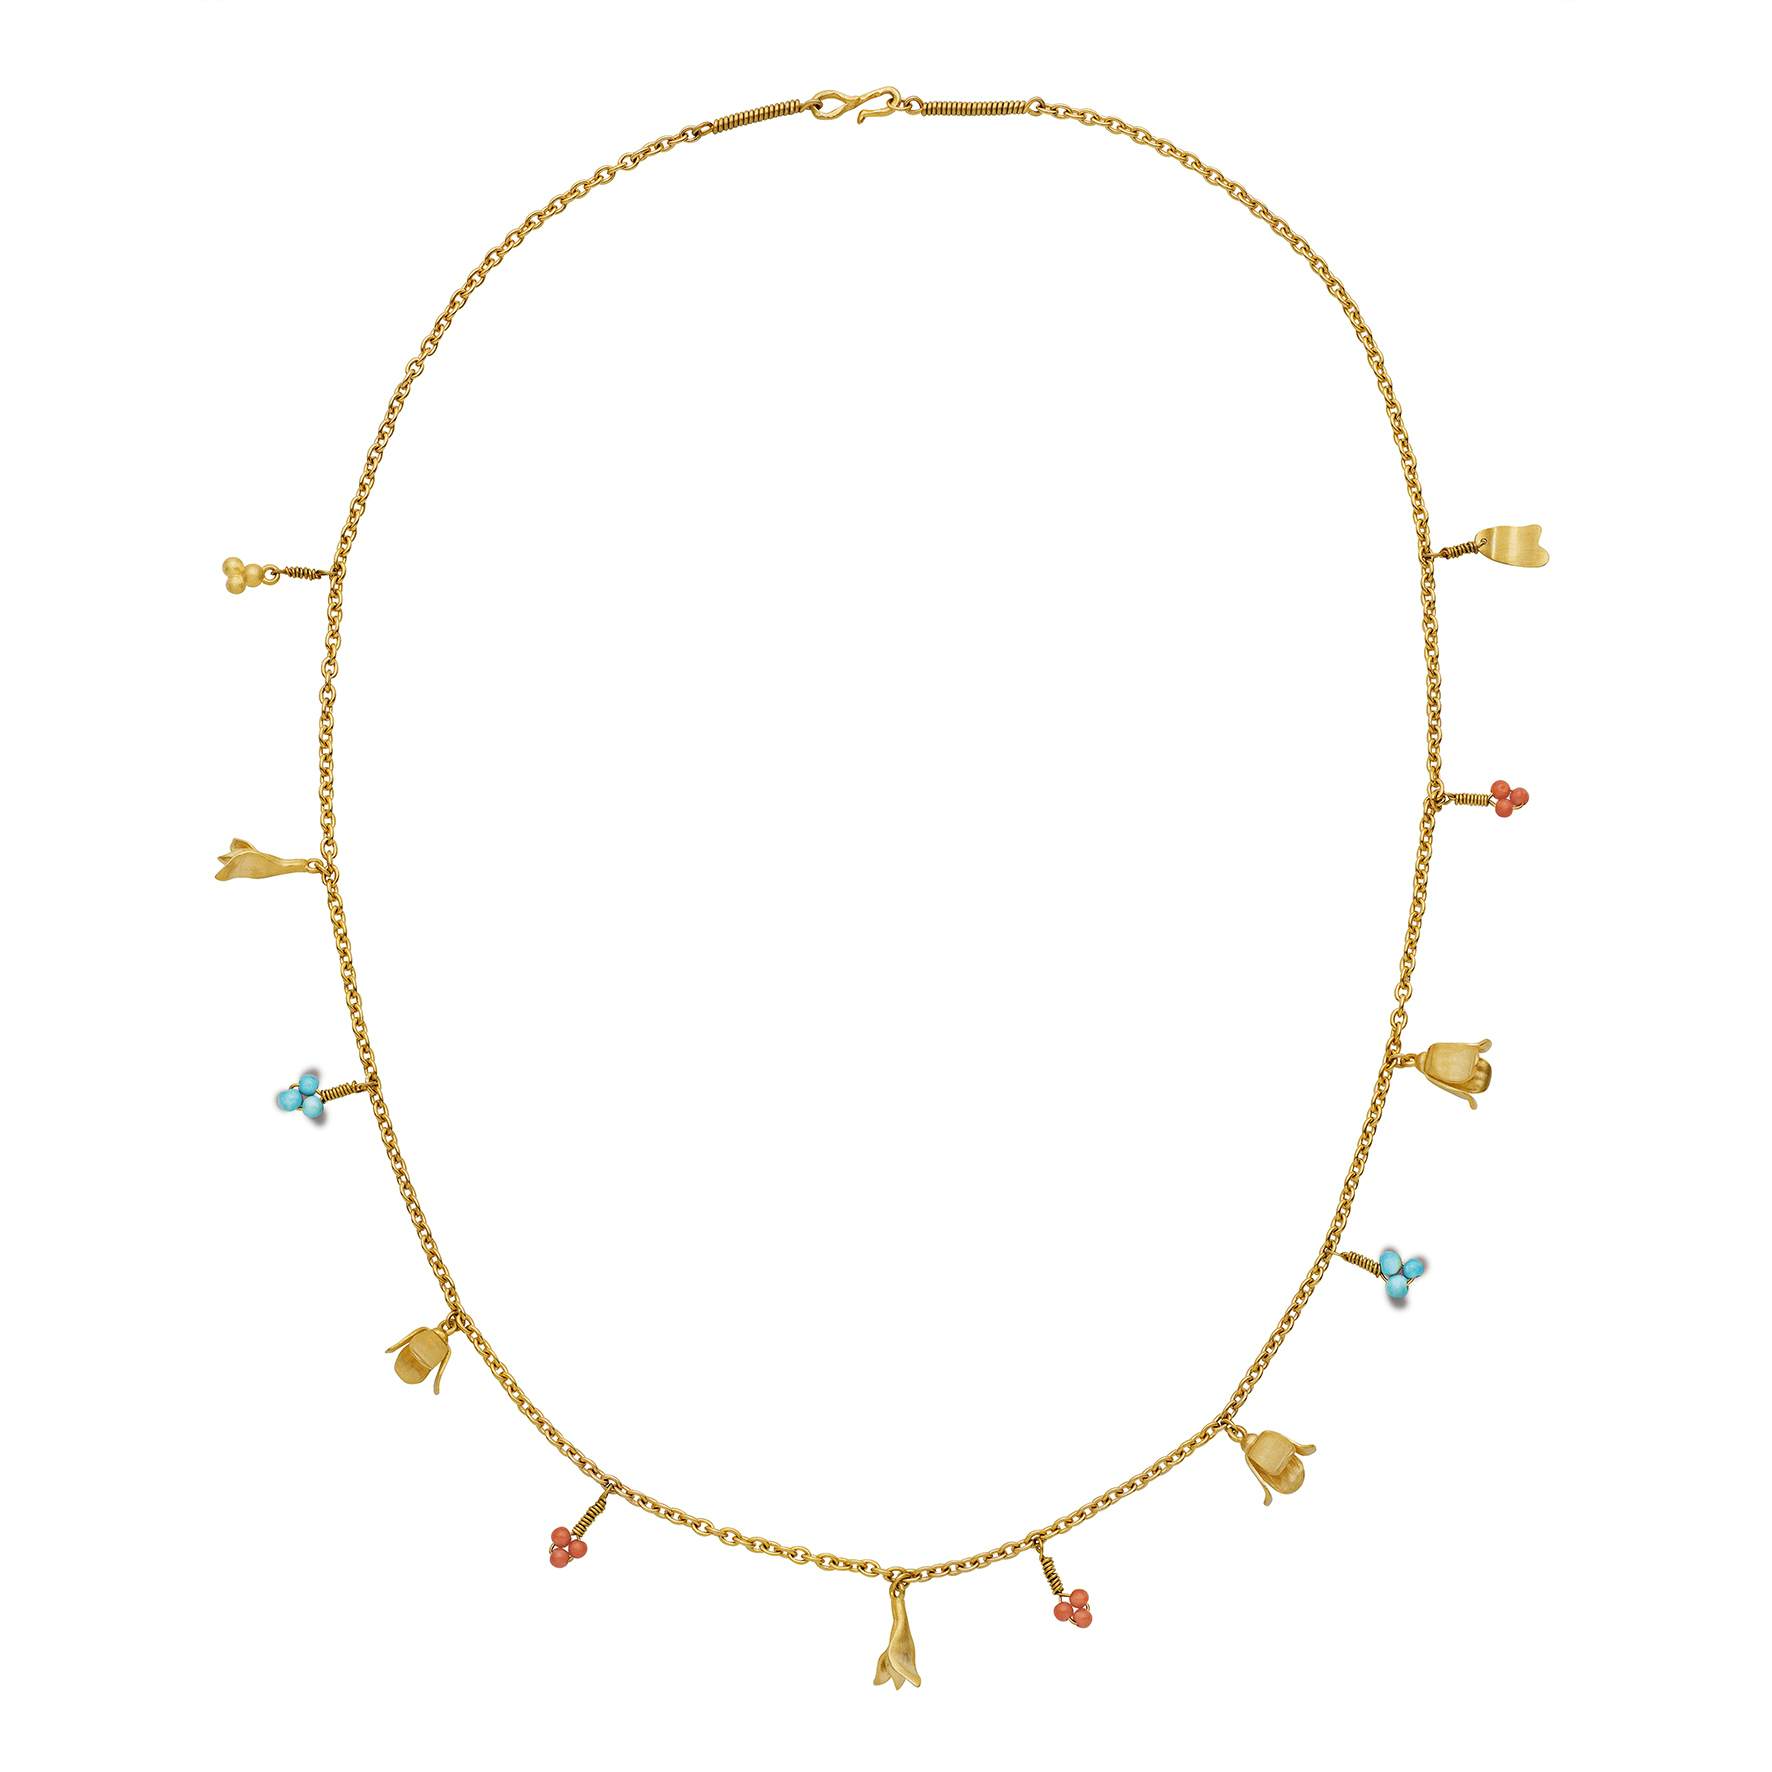 Bluebell Necklace von Maanesten in Vergoldet-Silber Sterling 925| Turquoise,Coral